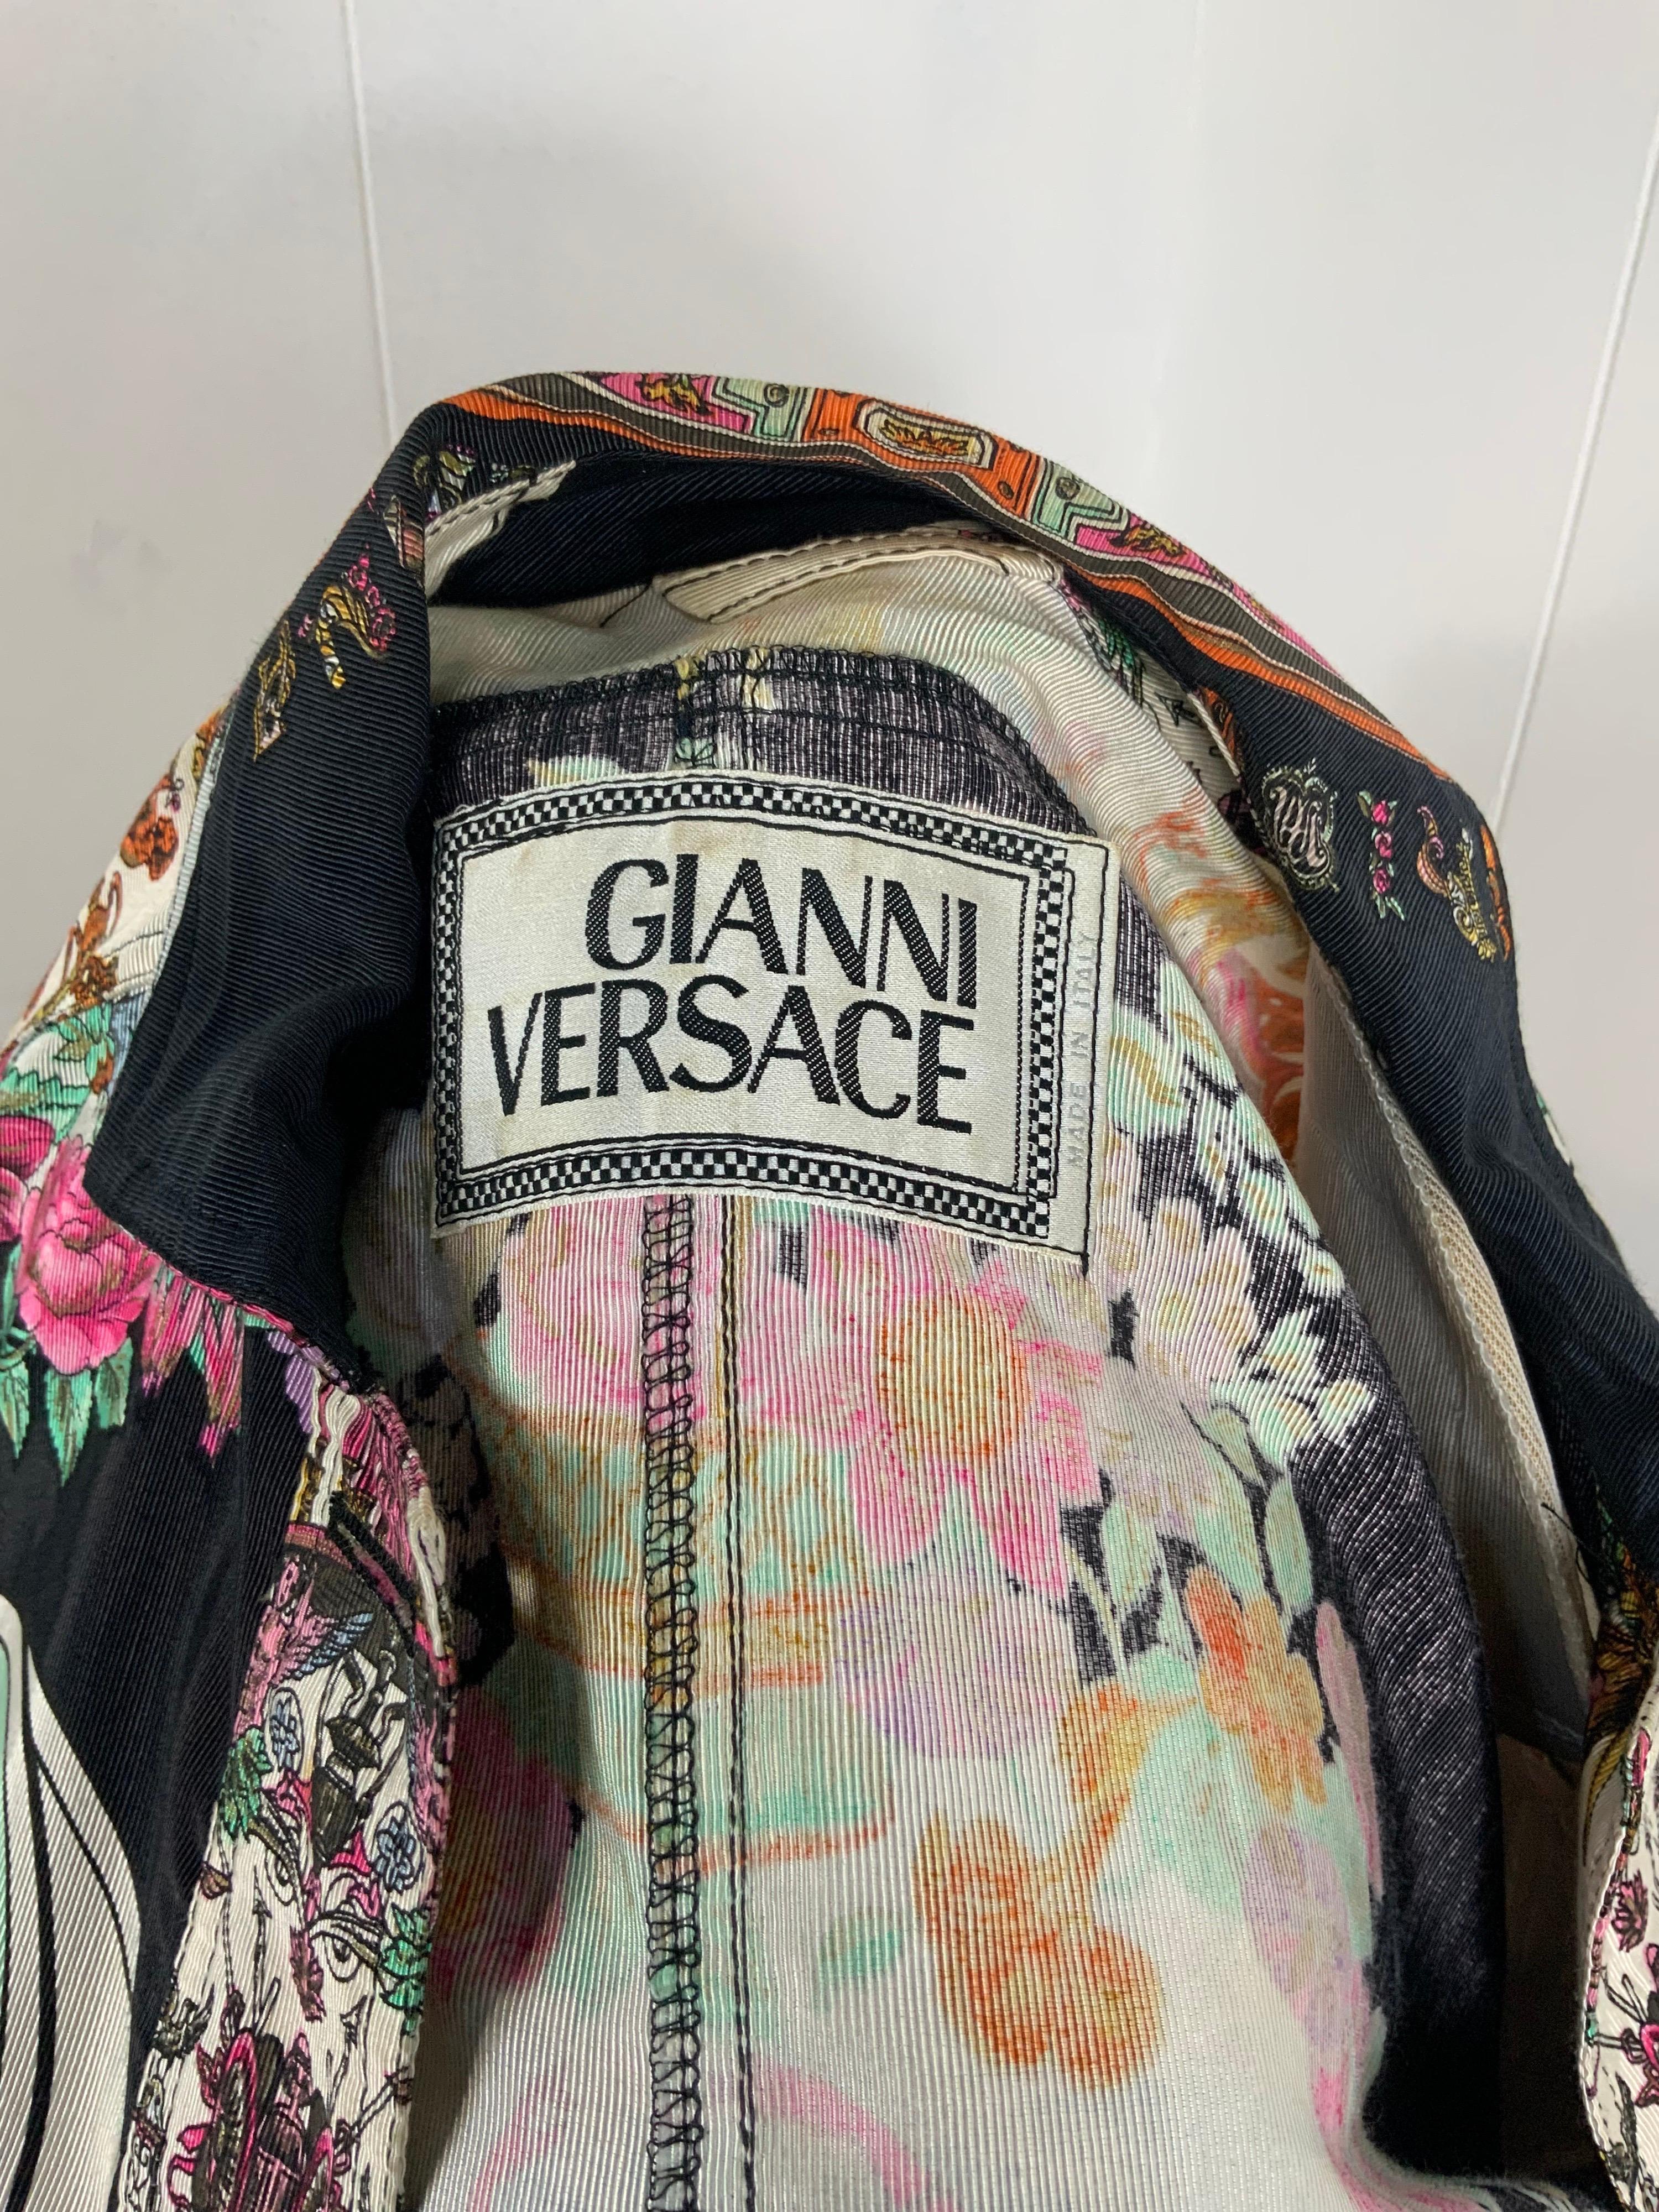 Gianni Versace Spring 92 Ballet Jacket  4